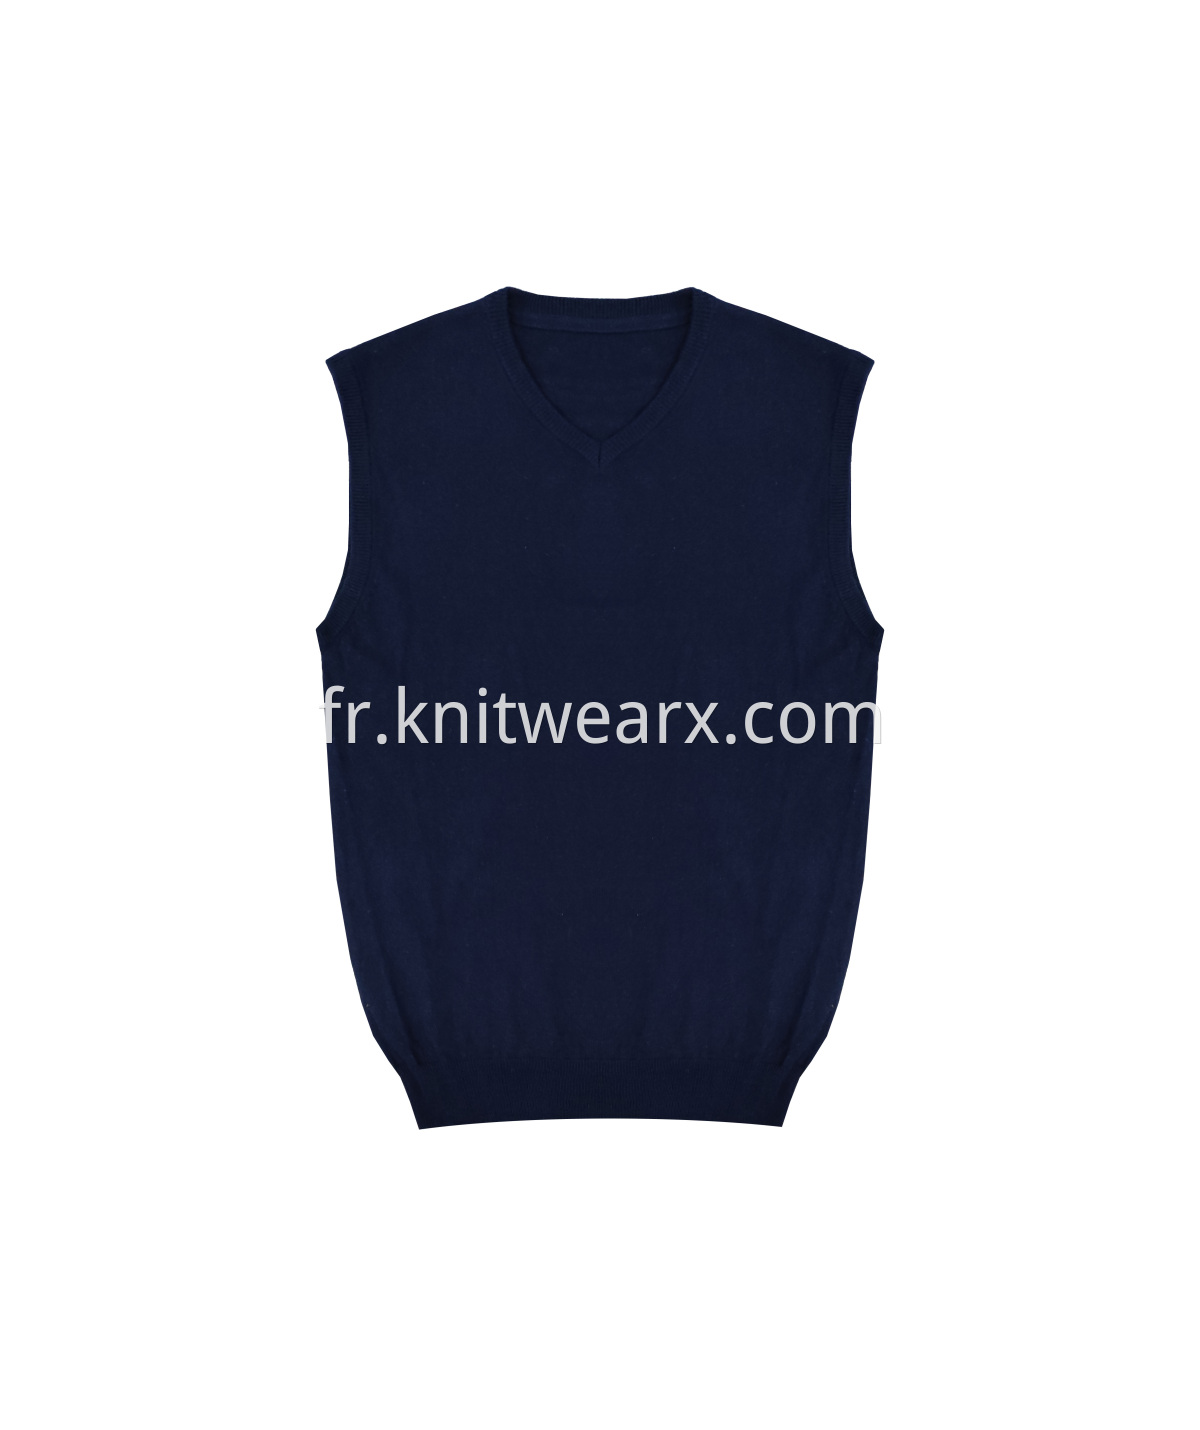 Men's Knitted Warm Vest V-neck Sweater